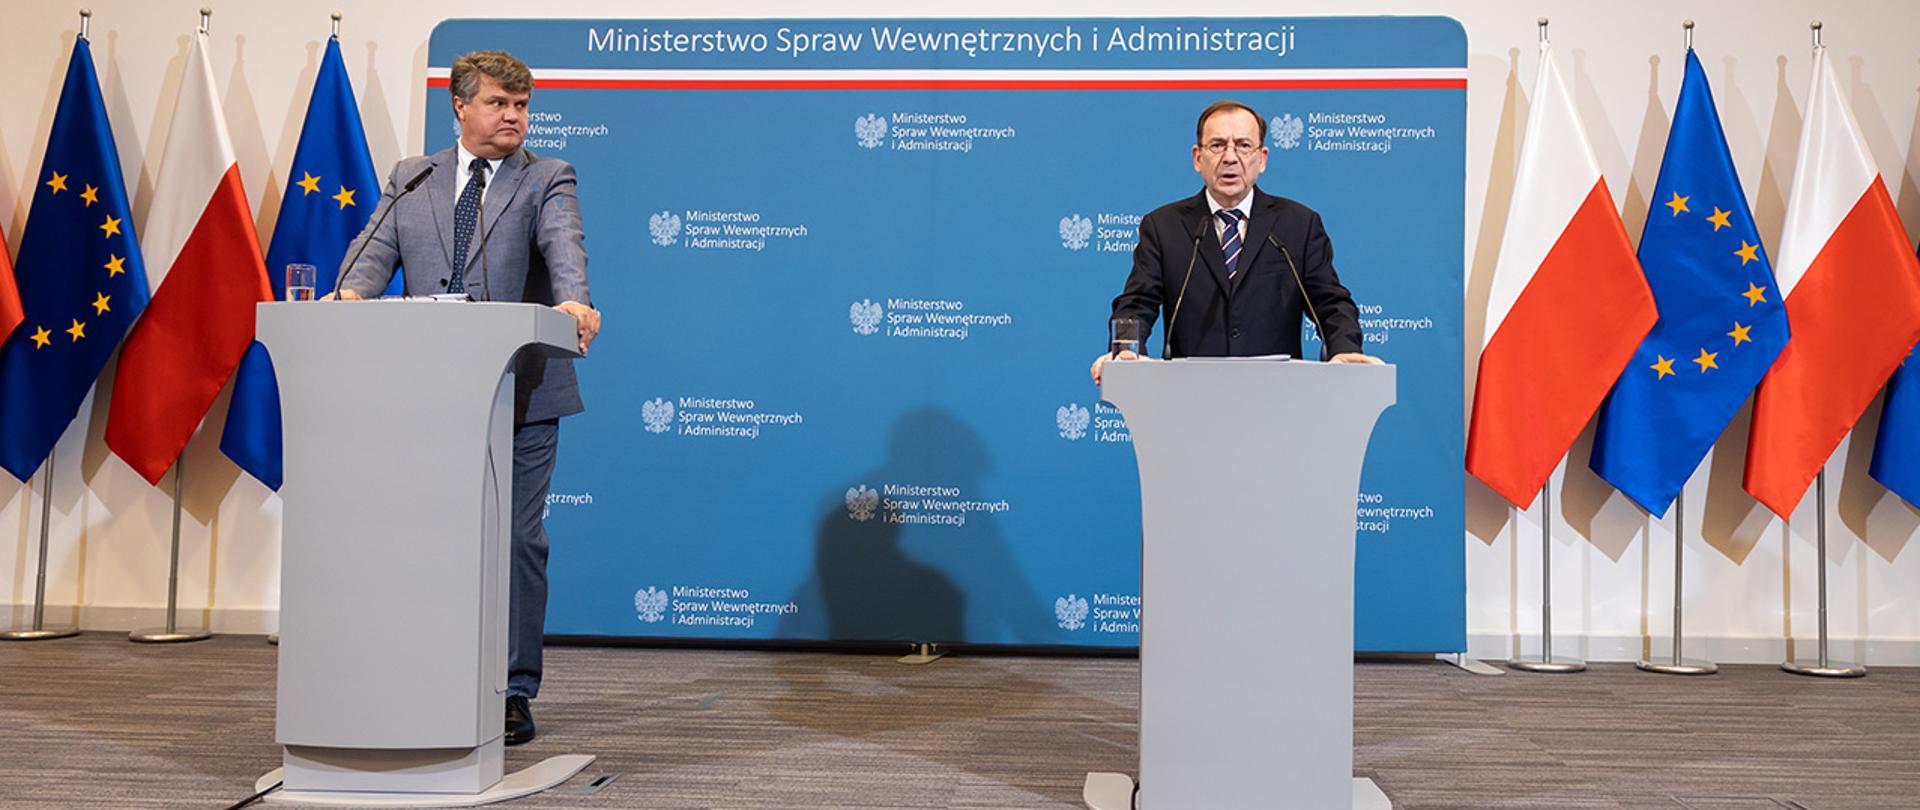 Minister Mariusz Kamiński and Deputy Minister Maciej Wąsik 